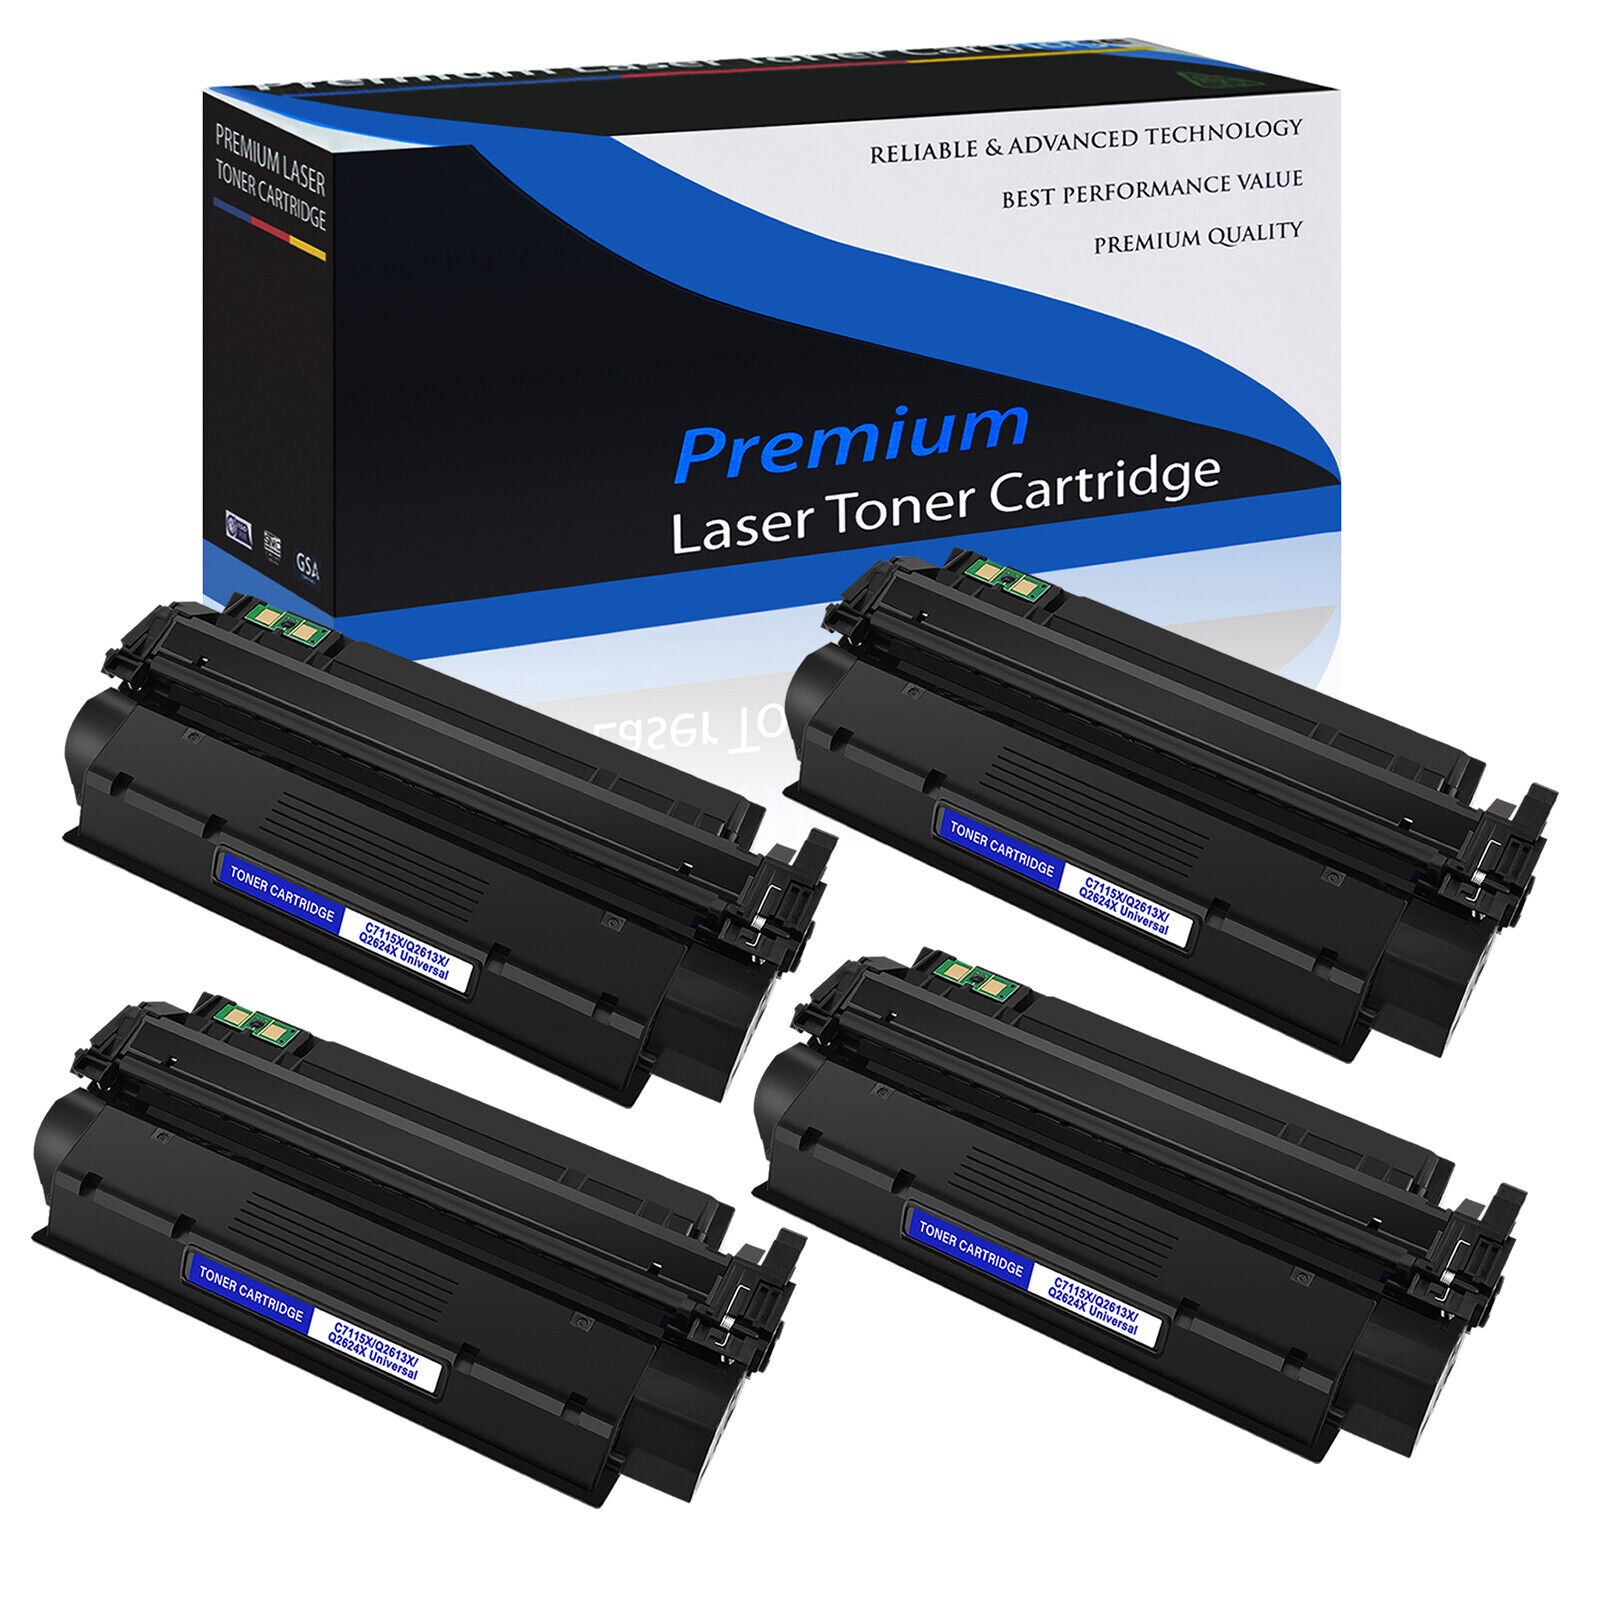 4 Pack C7115X 15X Toner Cartridge for HP LaserJet 1200 1220n 3320n 3380 3330mfp